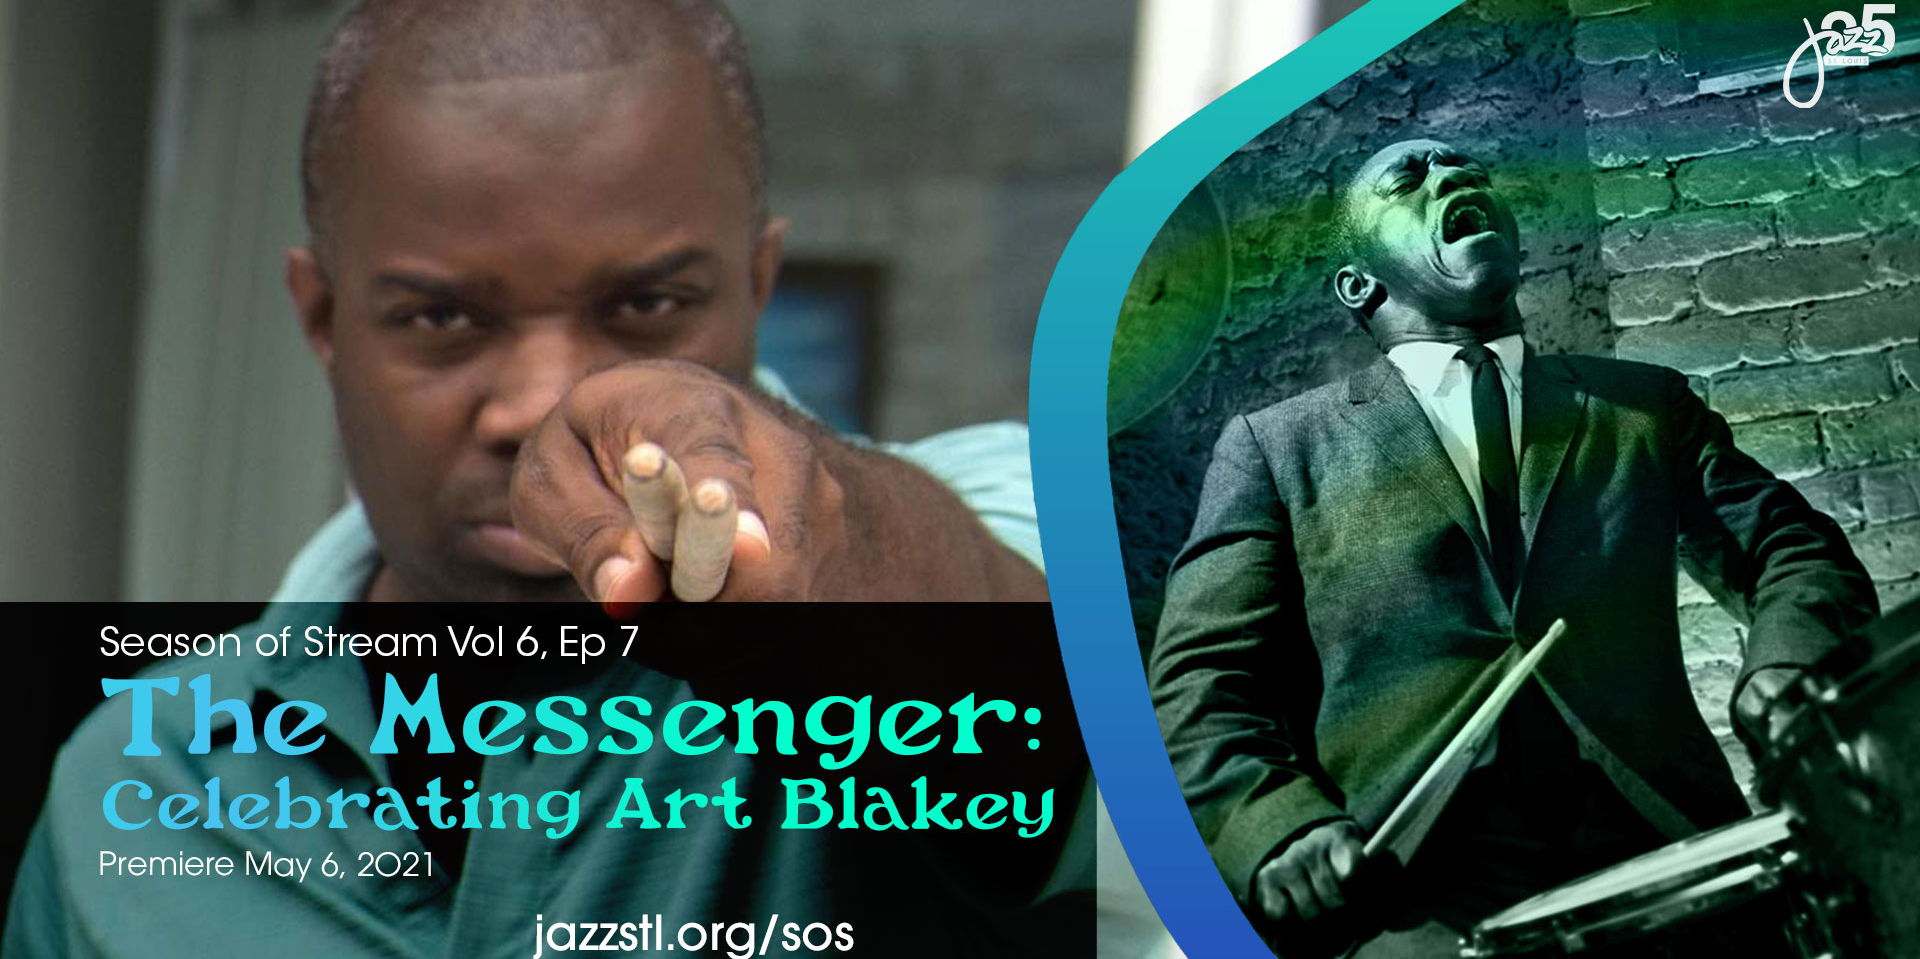 Season of Stream Vol 6, Ep 7 | The Messenger: Celebrating Art Blakey  promotional image